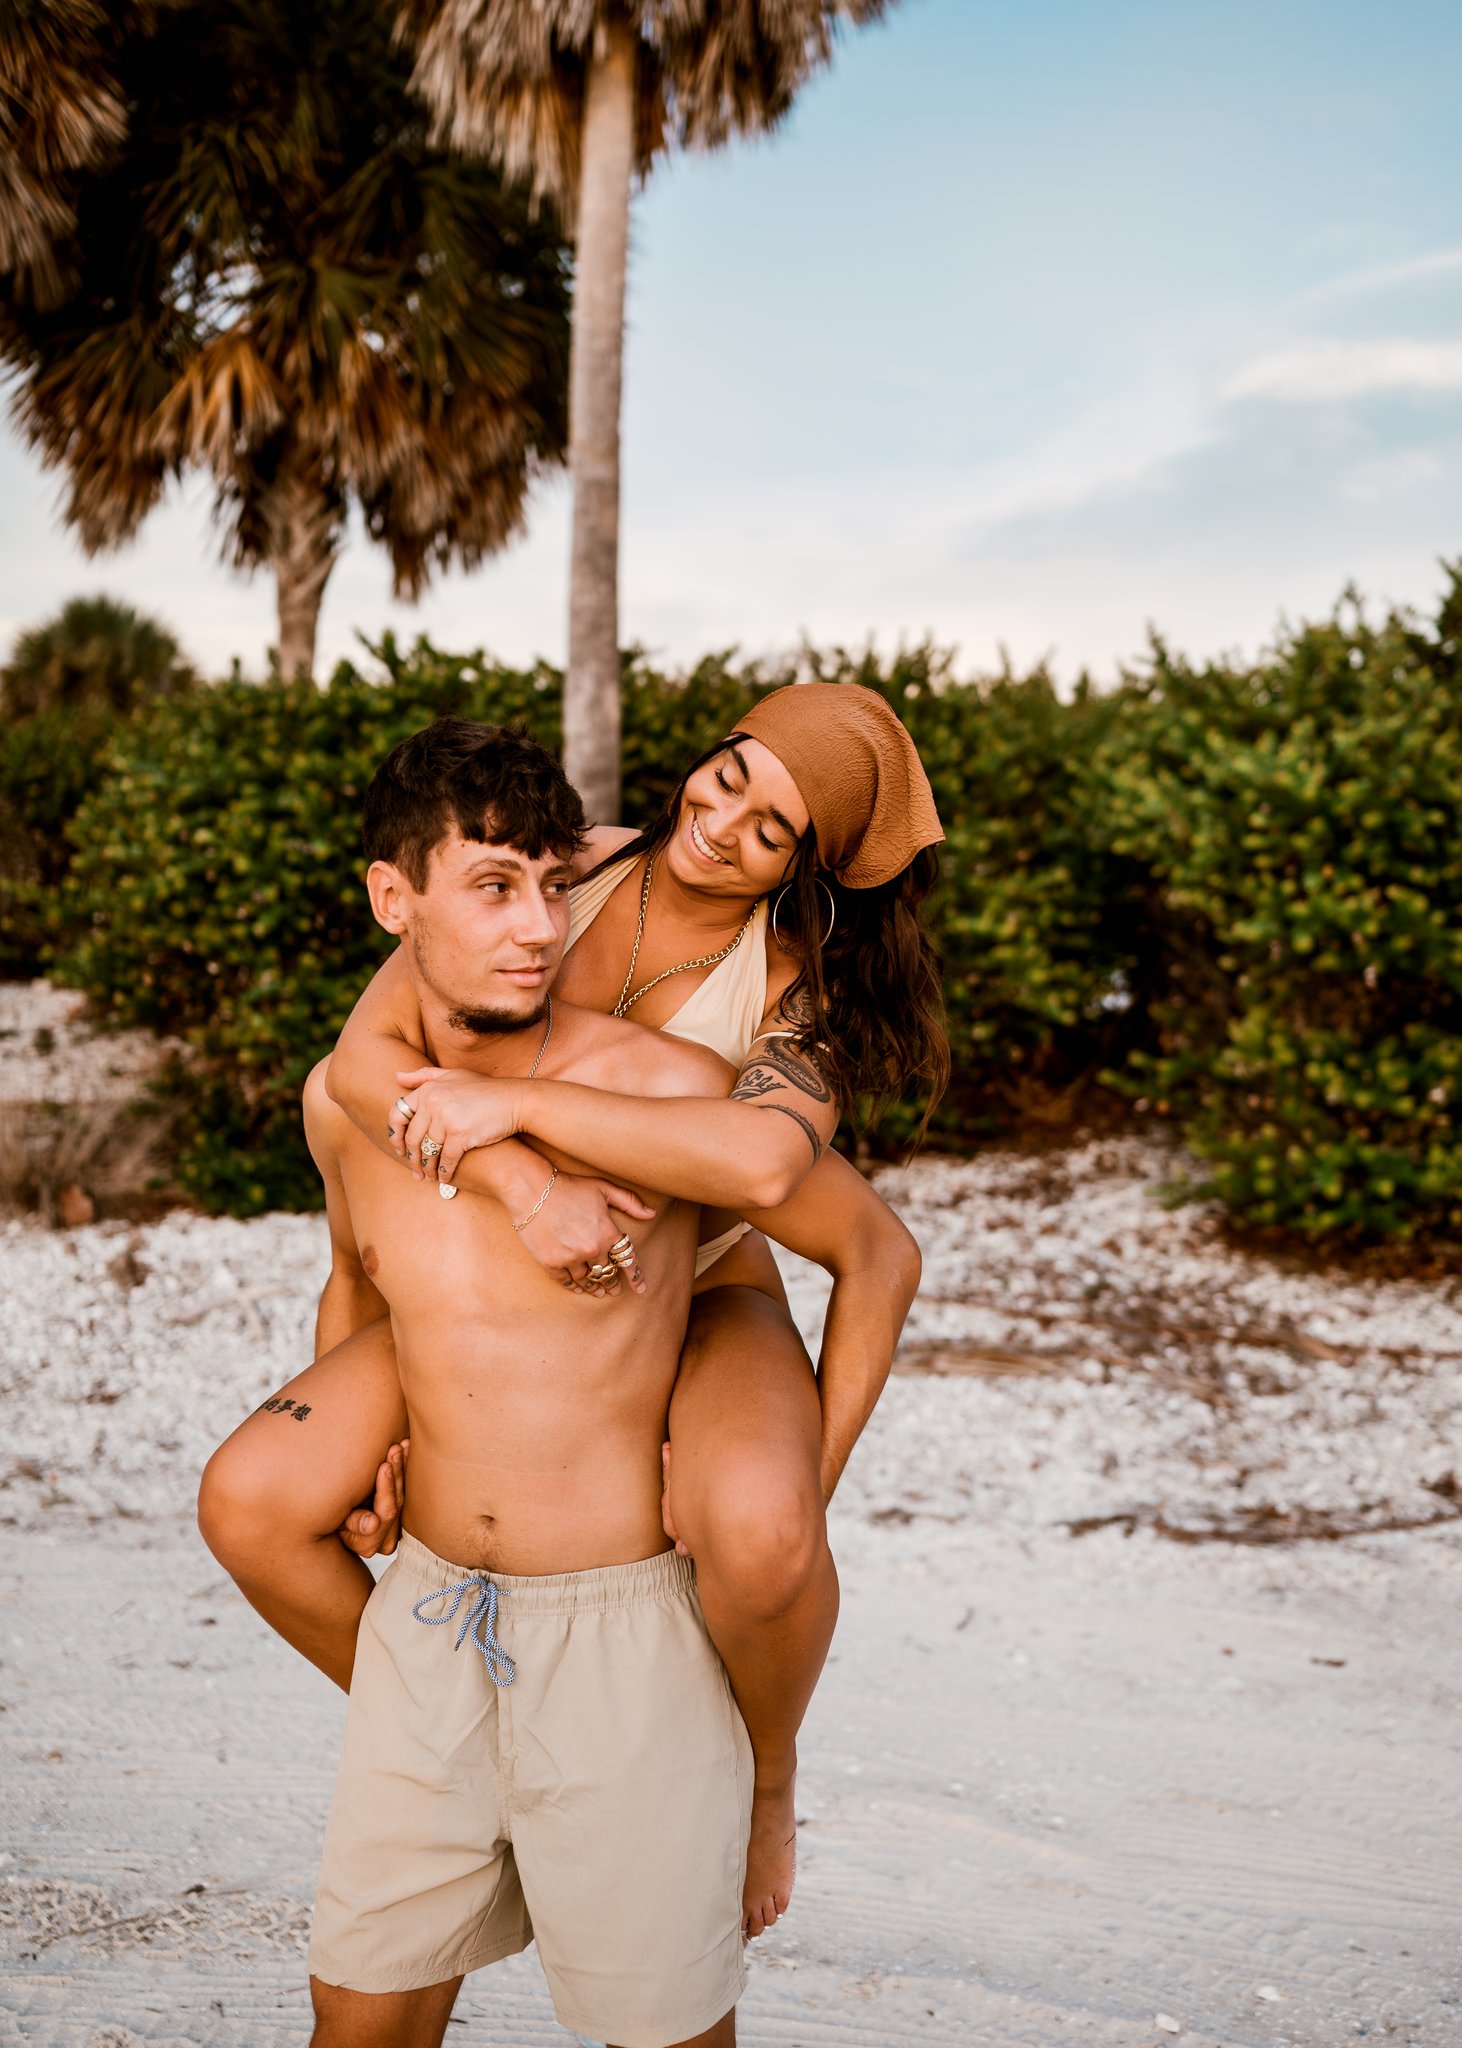 Chasing-Creative-Photography-Sanibel-Captiva-Florida-Beach-Photoshoot-16